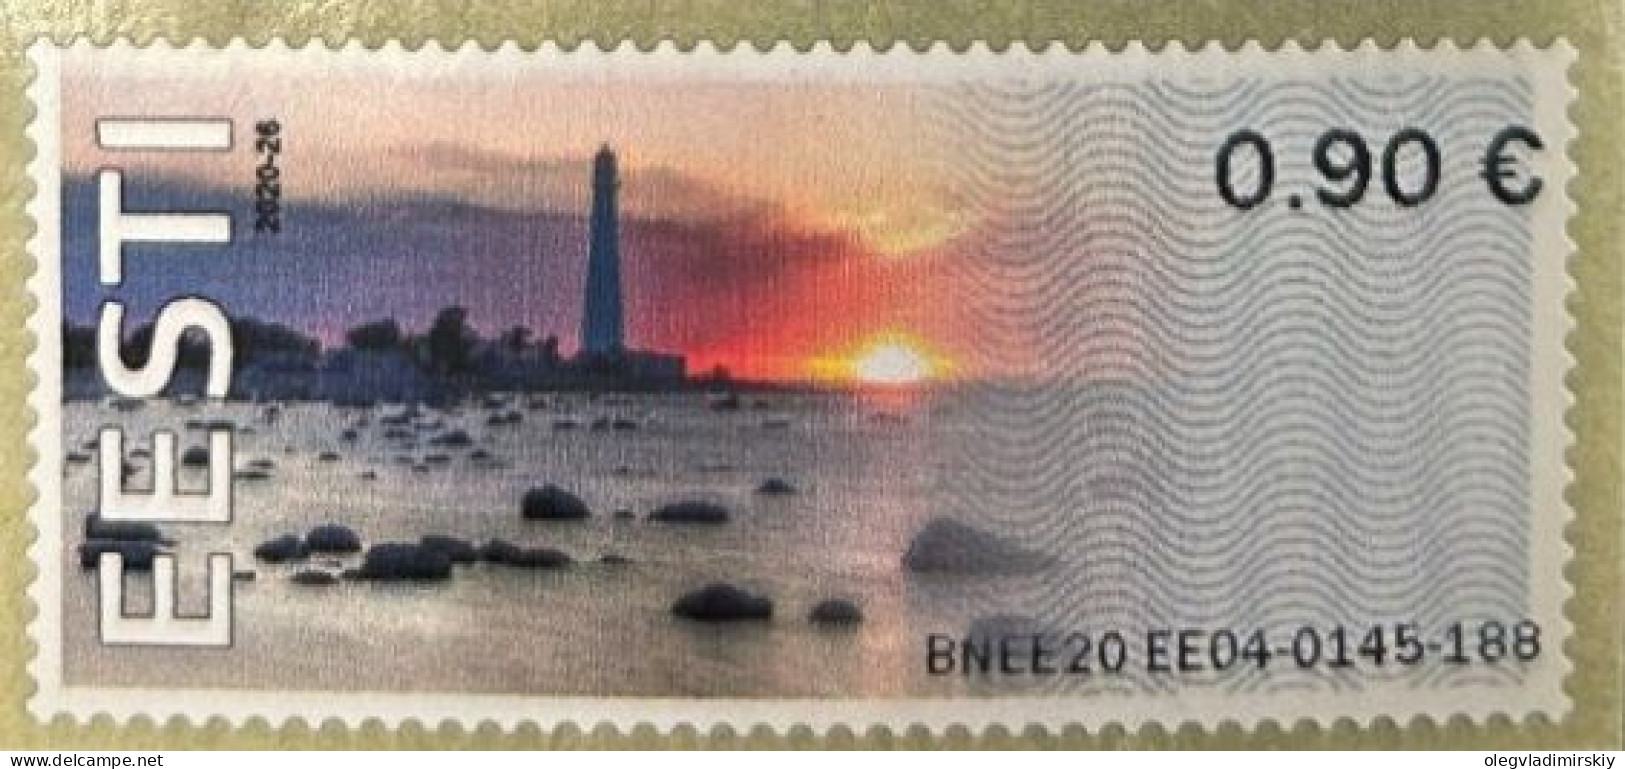 Estonia Estland Estonie 2020 Tahkuna Lighthouse Stamp MNH - Phares